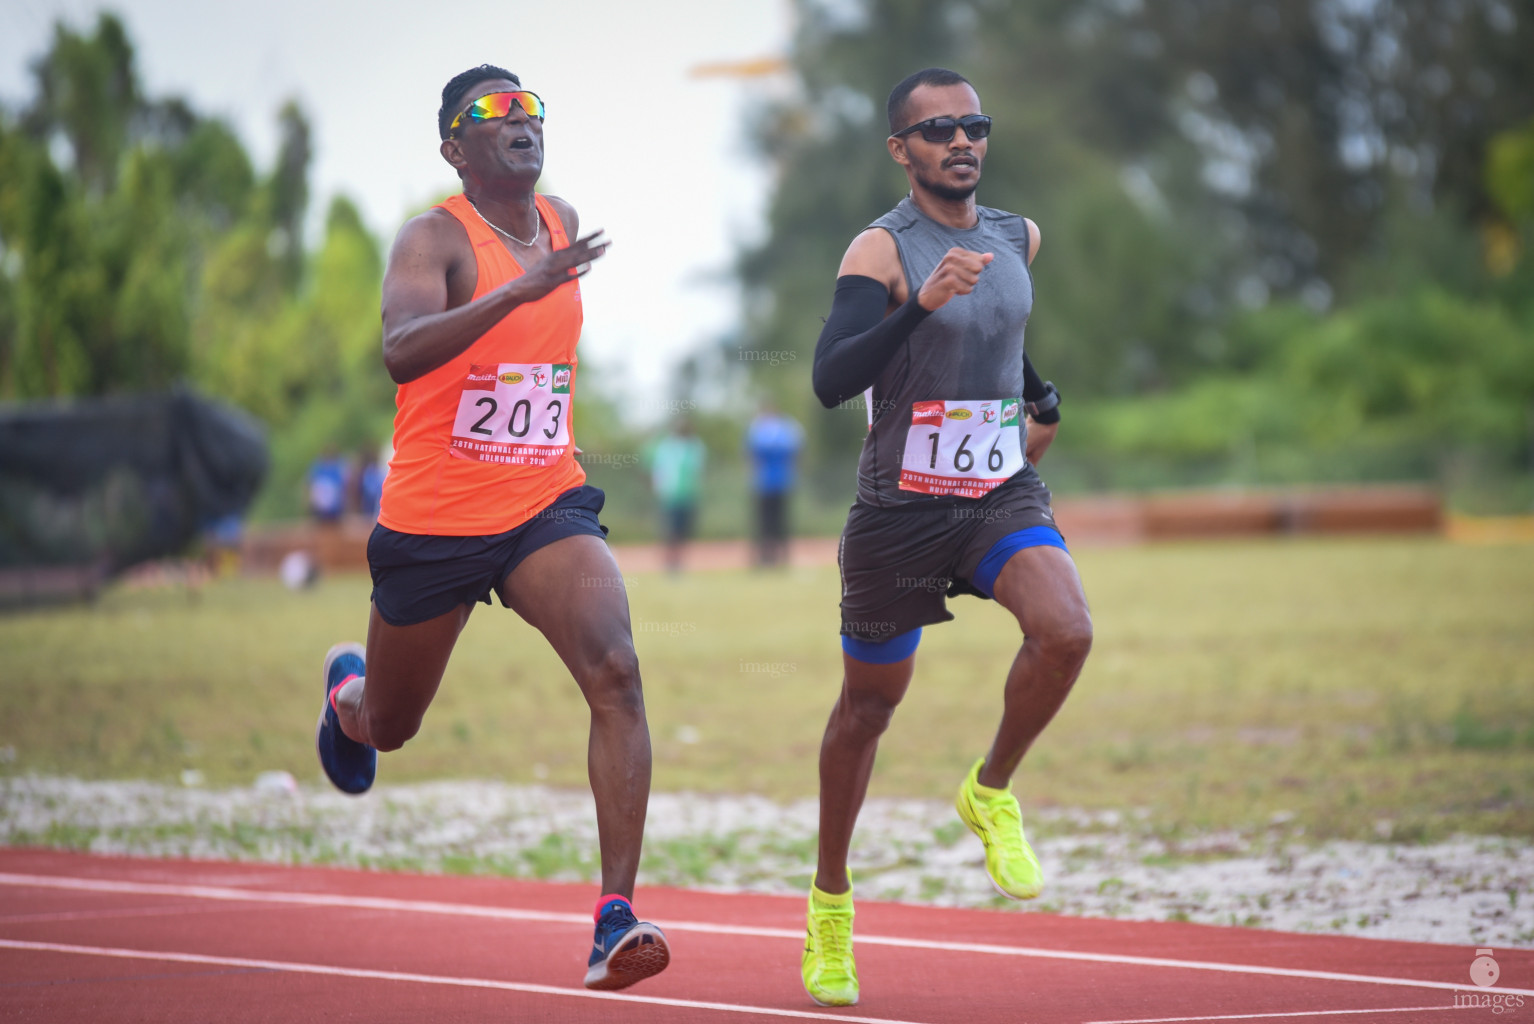 28th National Athletics Championship 2018, Day 3 (Photo: Ismail Thoriq / images.mv)